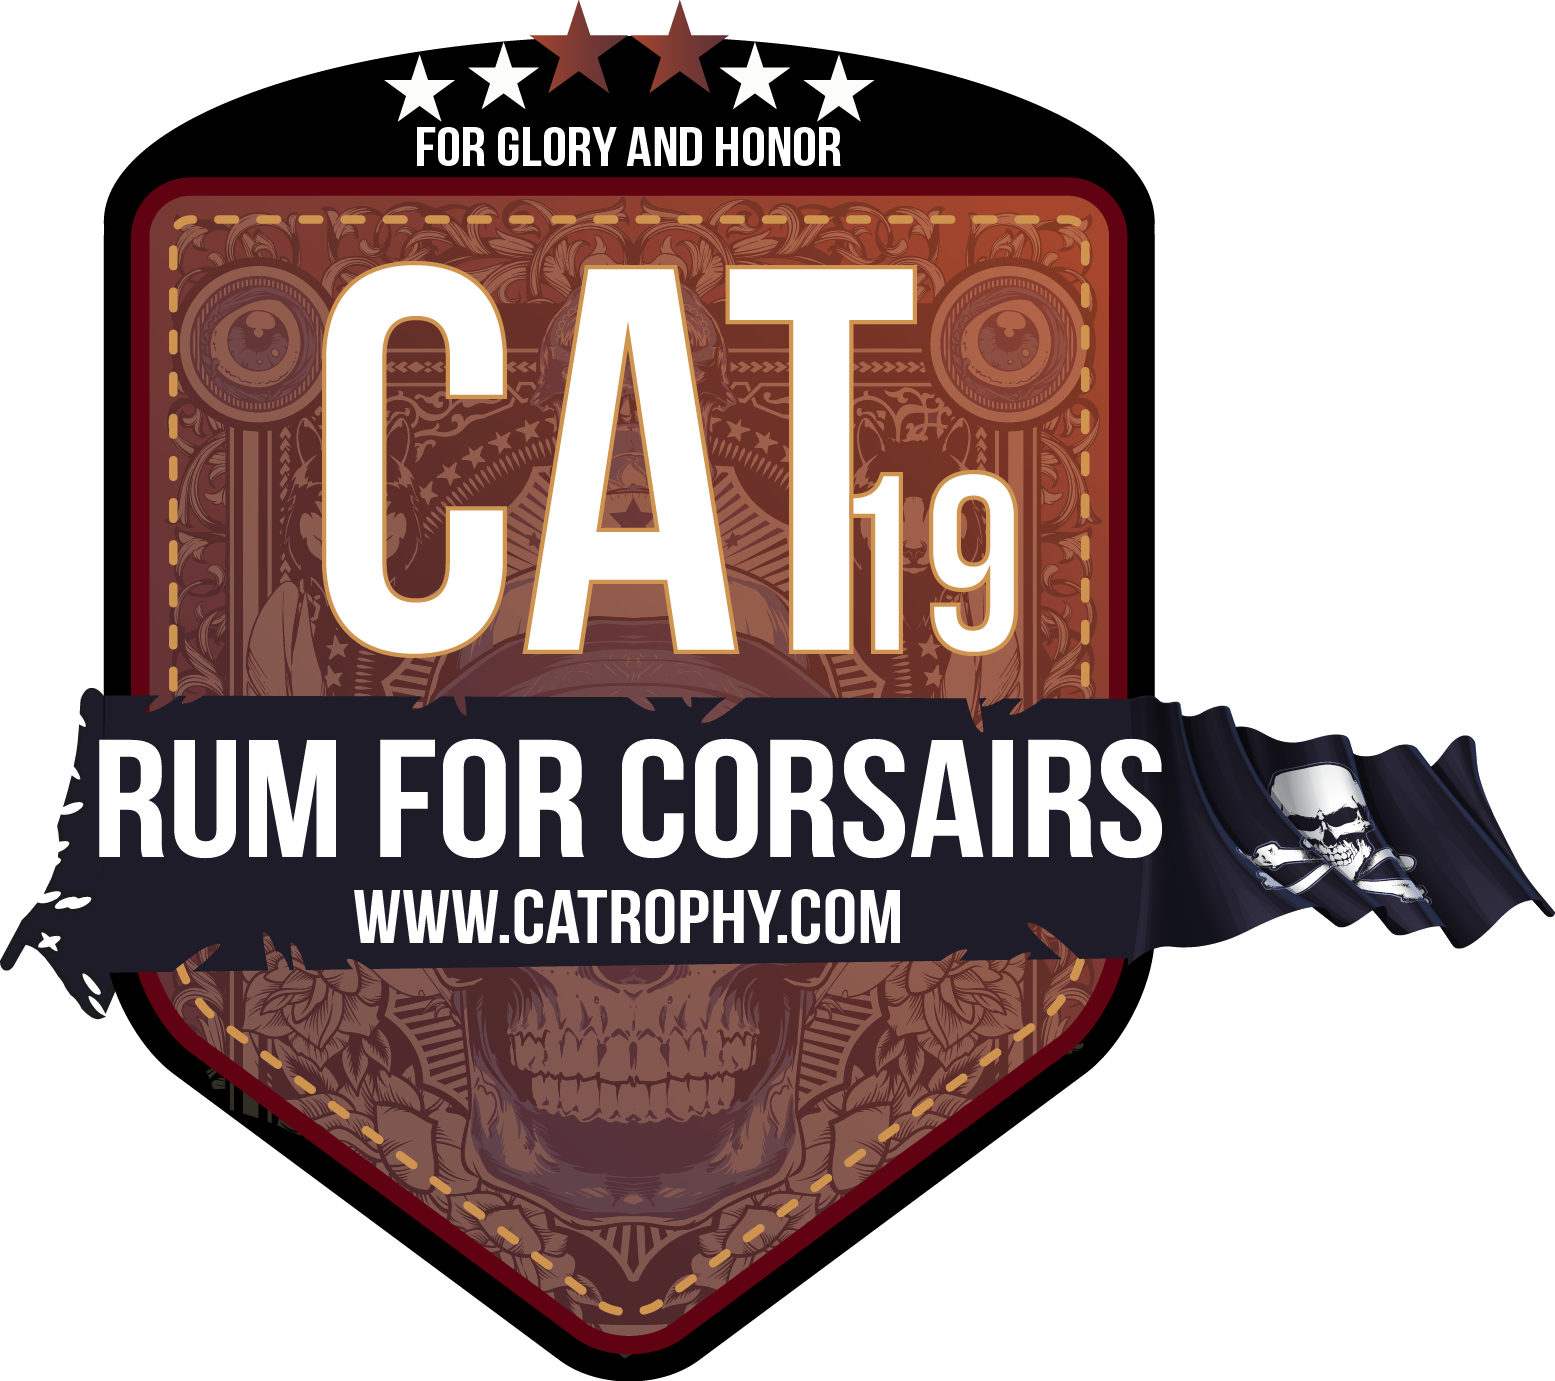 Catrophy 2010 Logo rum for corsairs